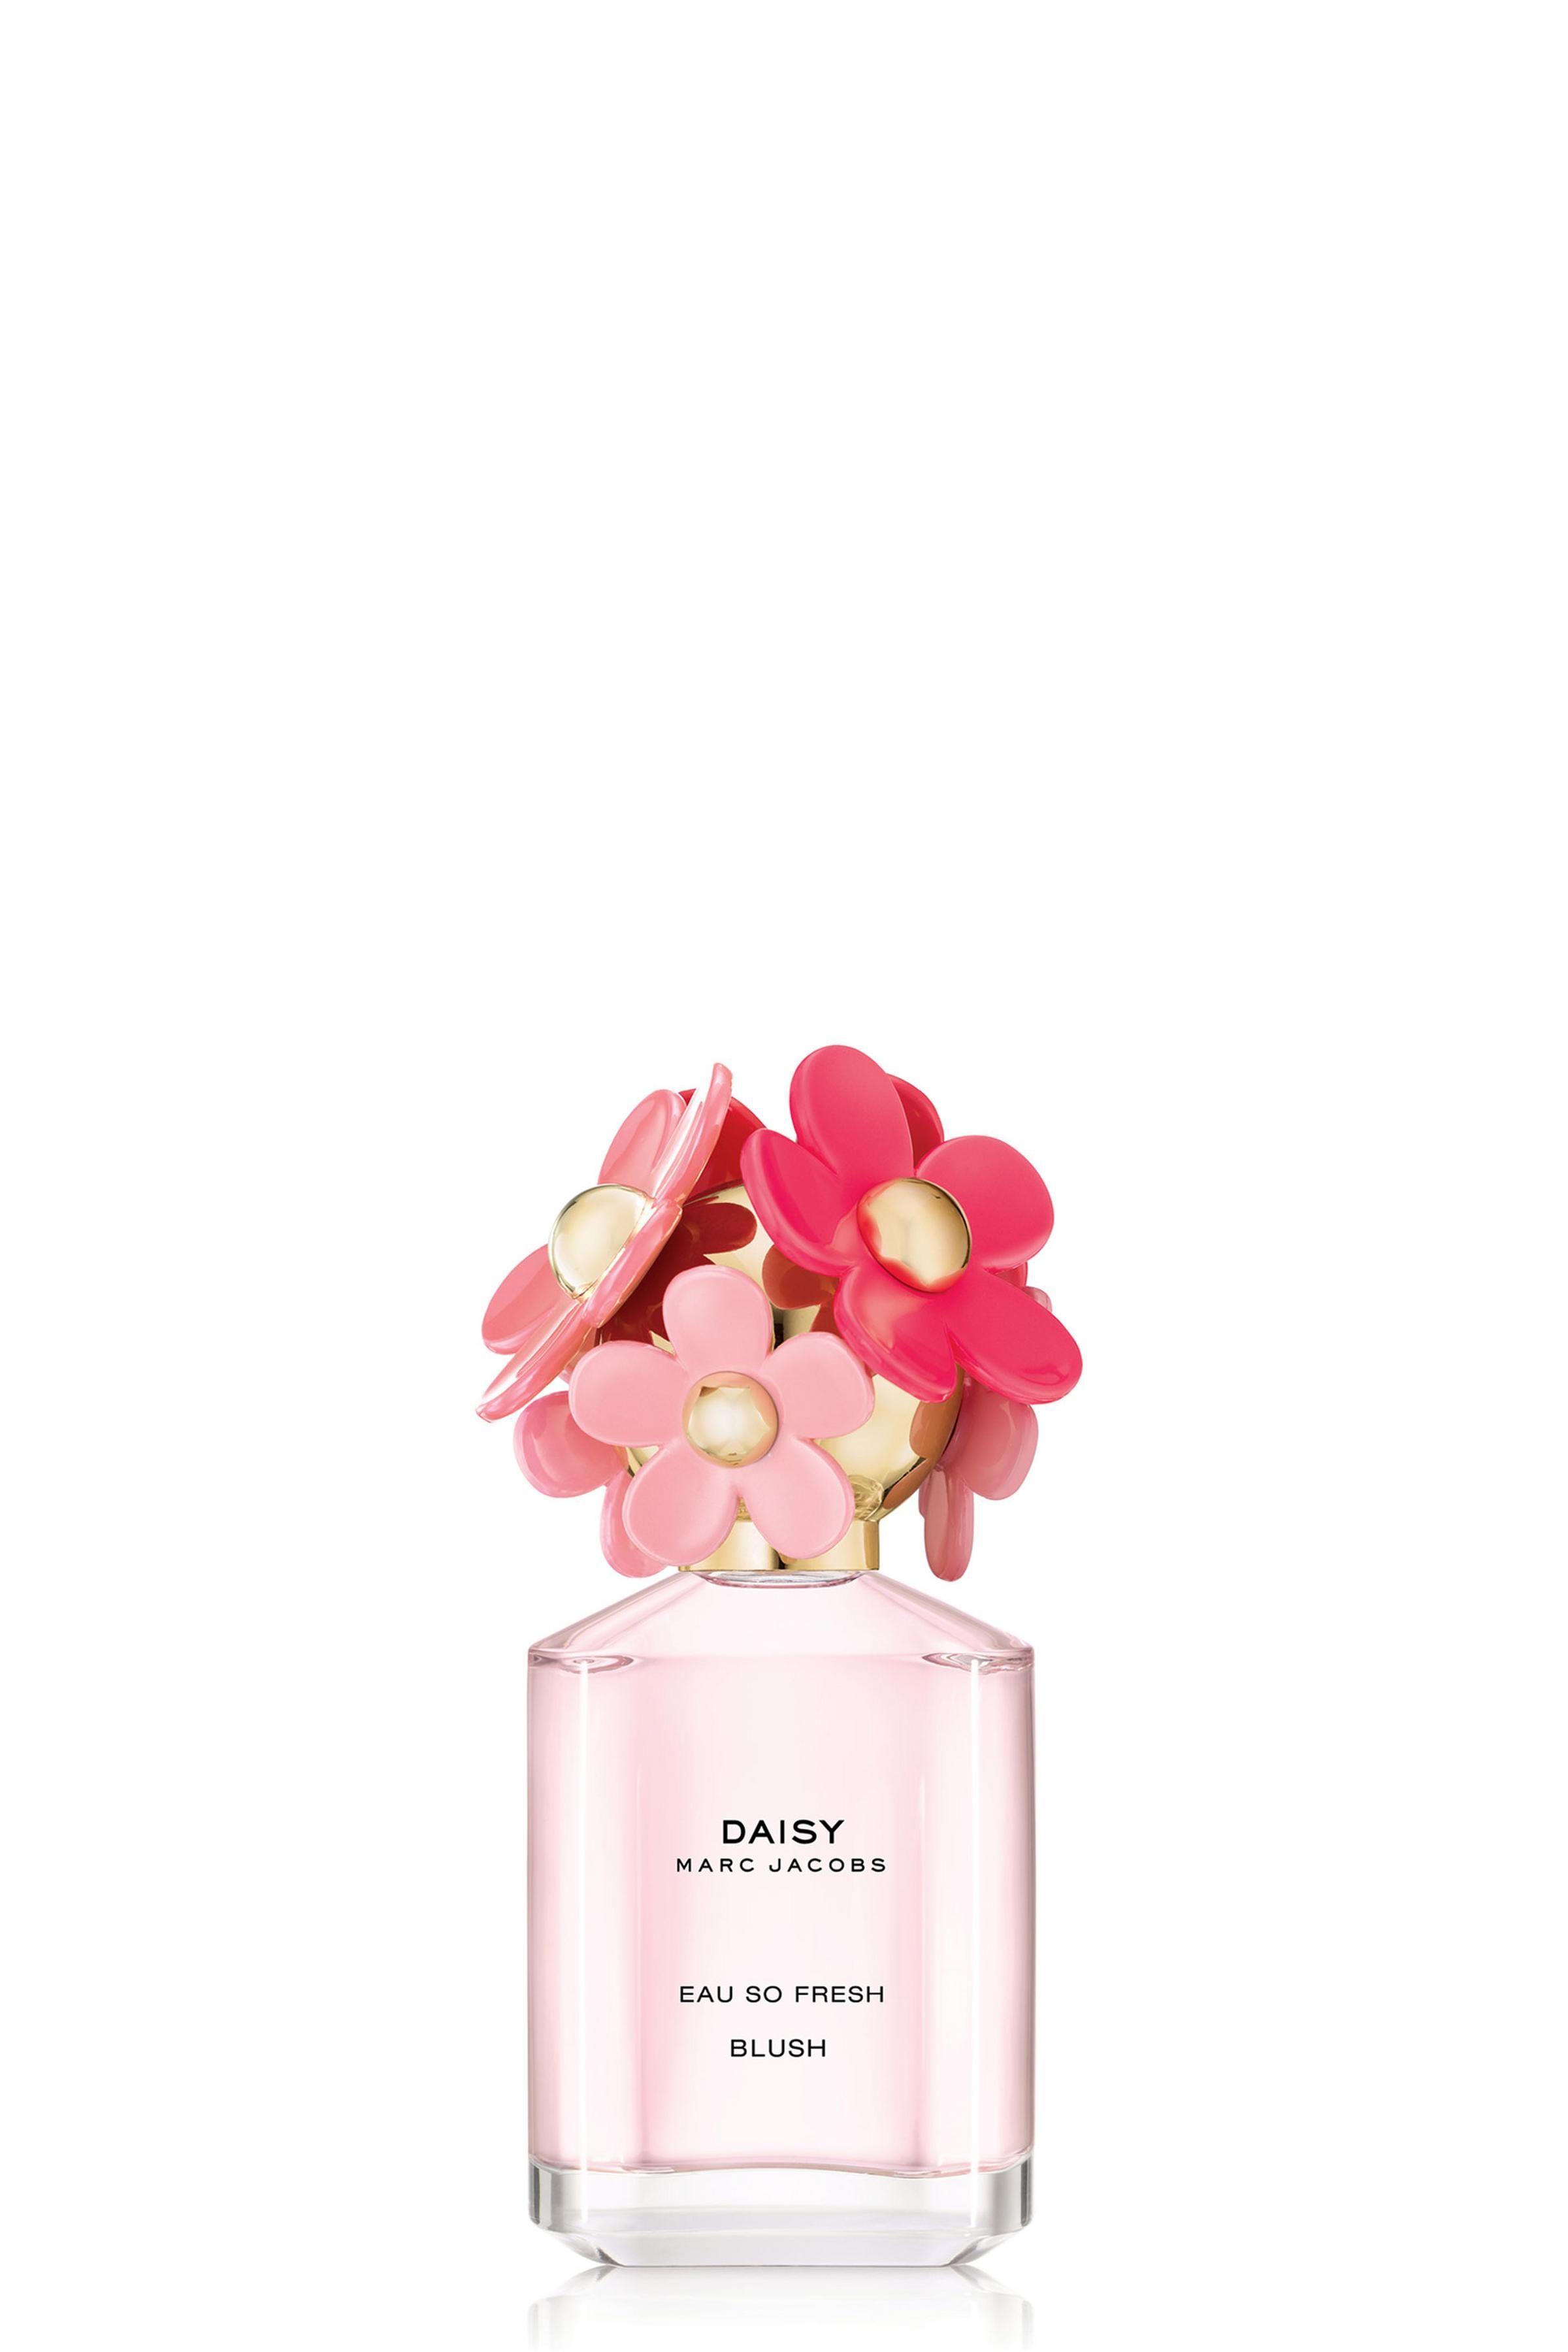 Marc Jacobs Daisy Eau So Fresh Blush | Fragrance | Pinterest | Marc ...